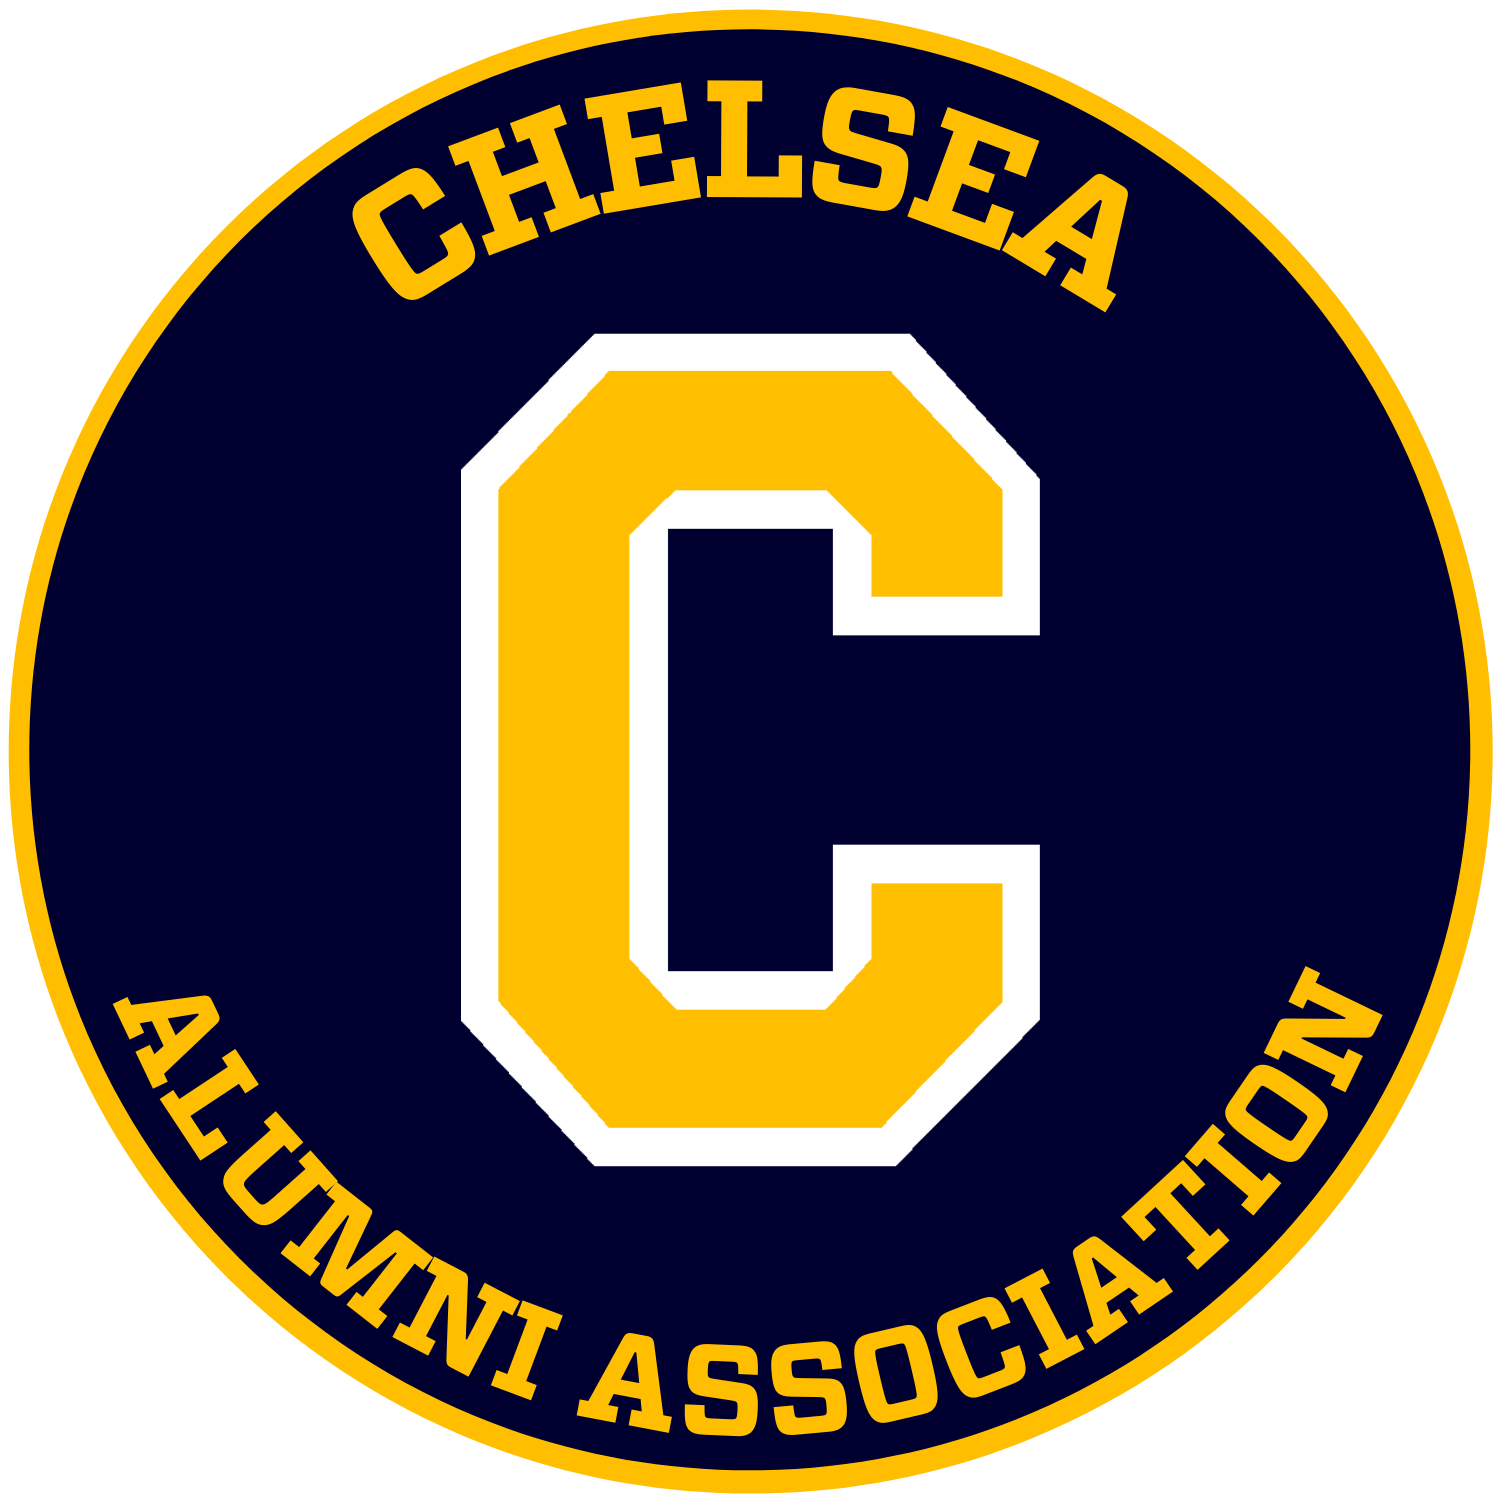 Chelsea Alumni Association